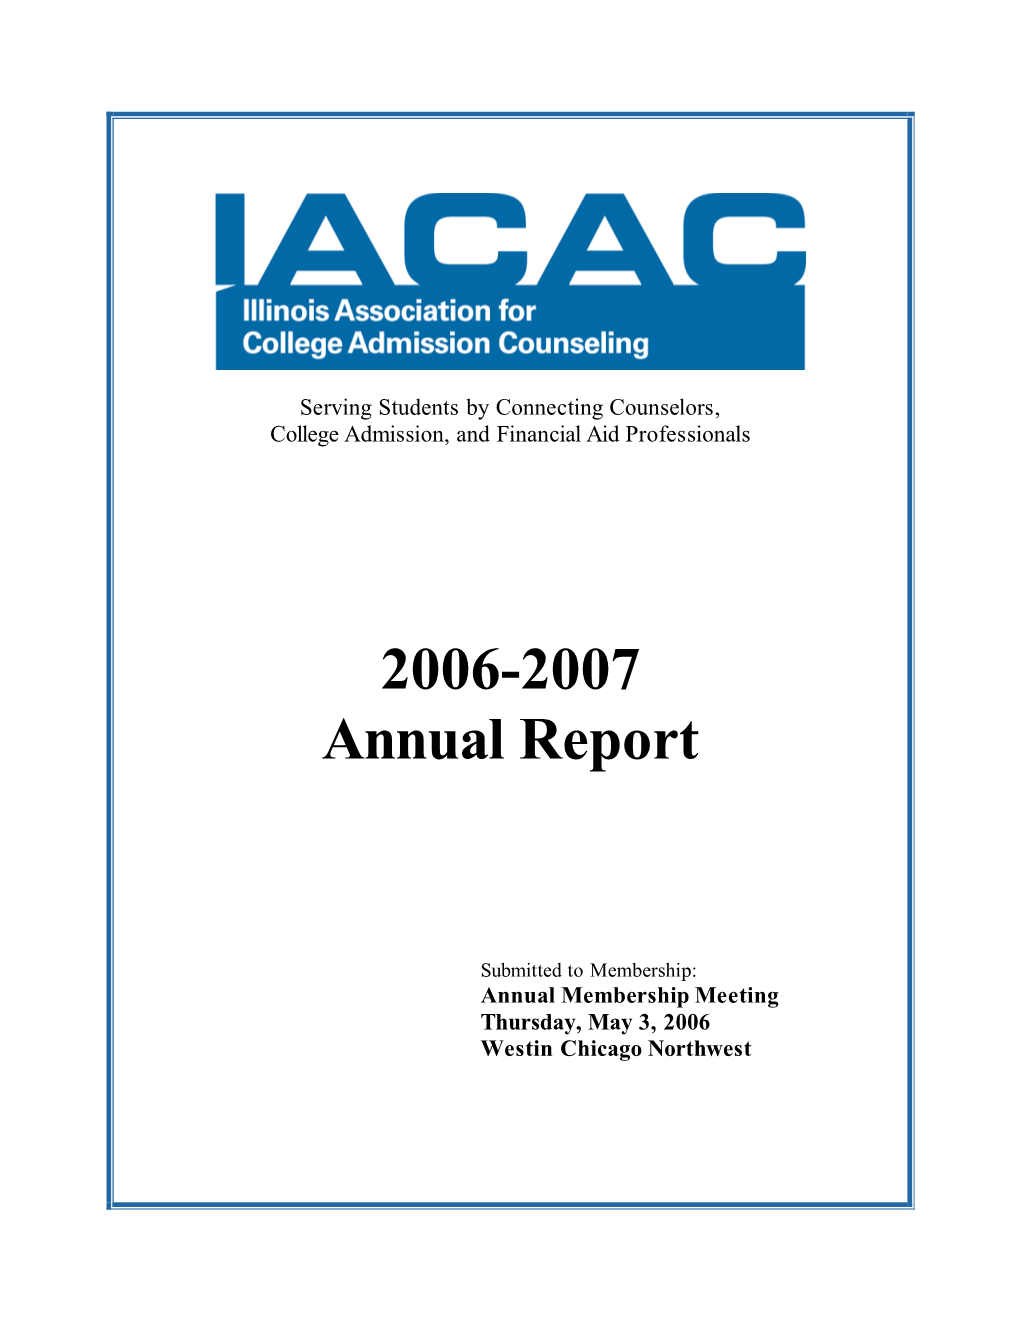 IACAC Annual Report 2006-2007